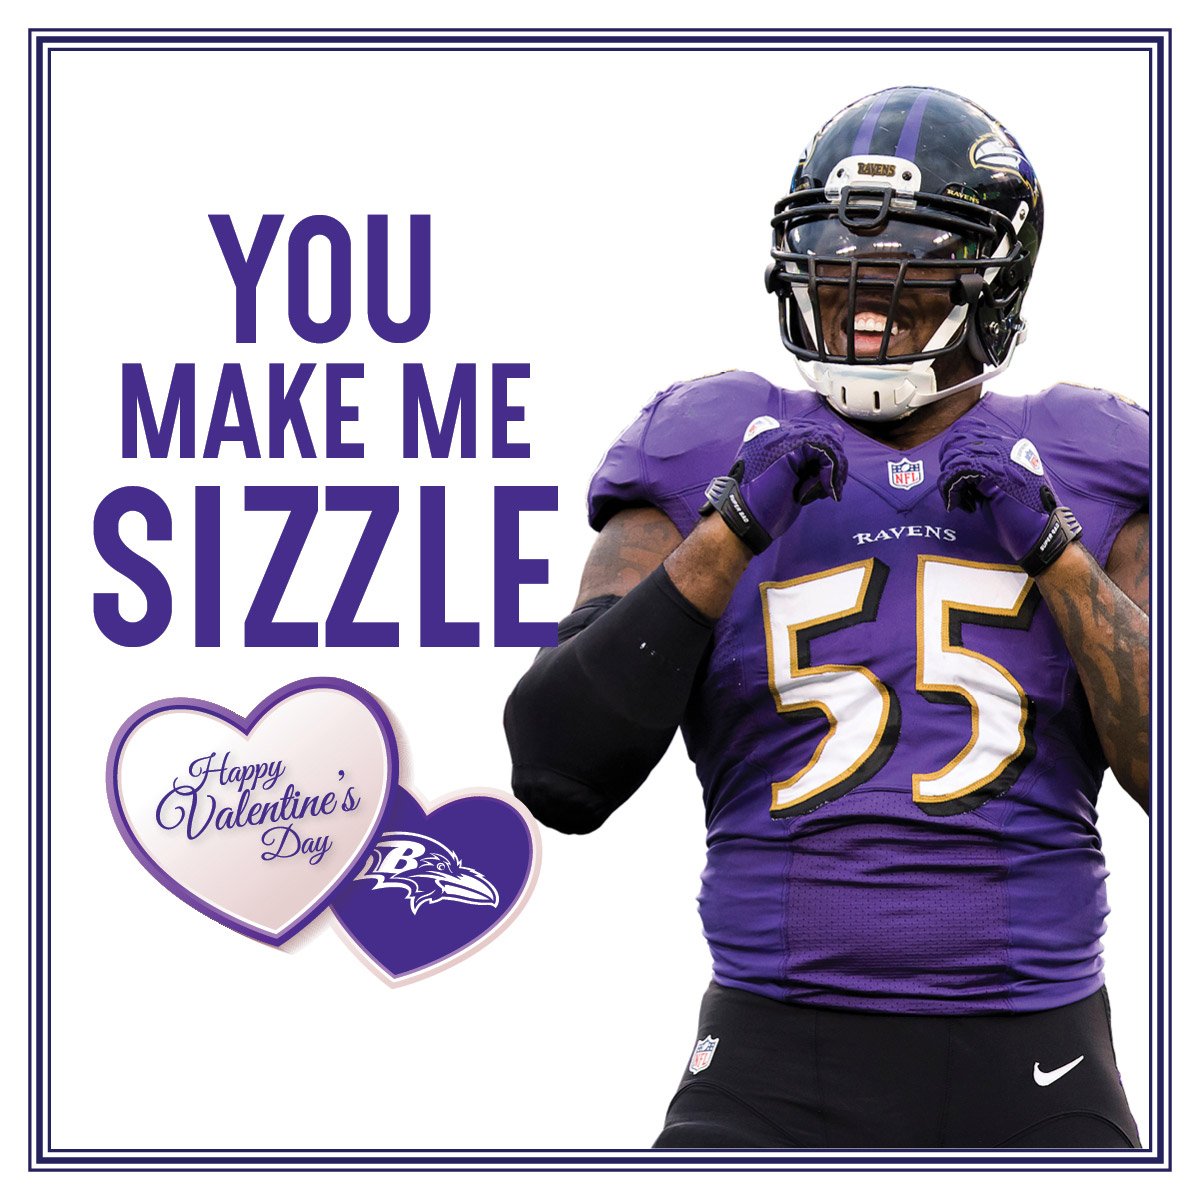 Happy Valentine's Day, #RavensFlock! https://t.co/a1n0QmTPAr